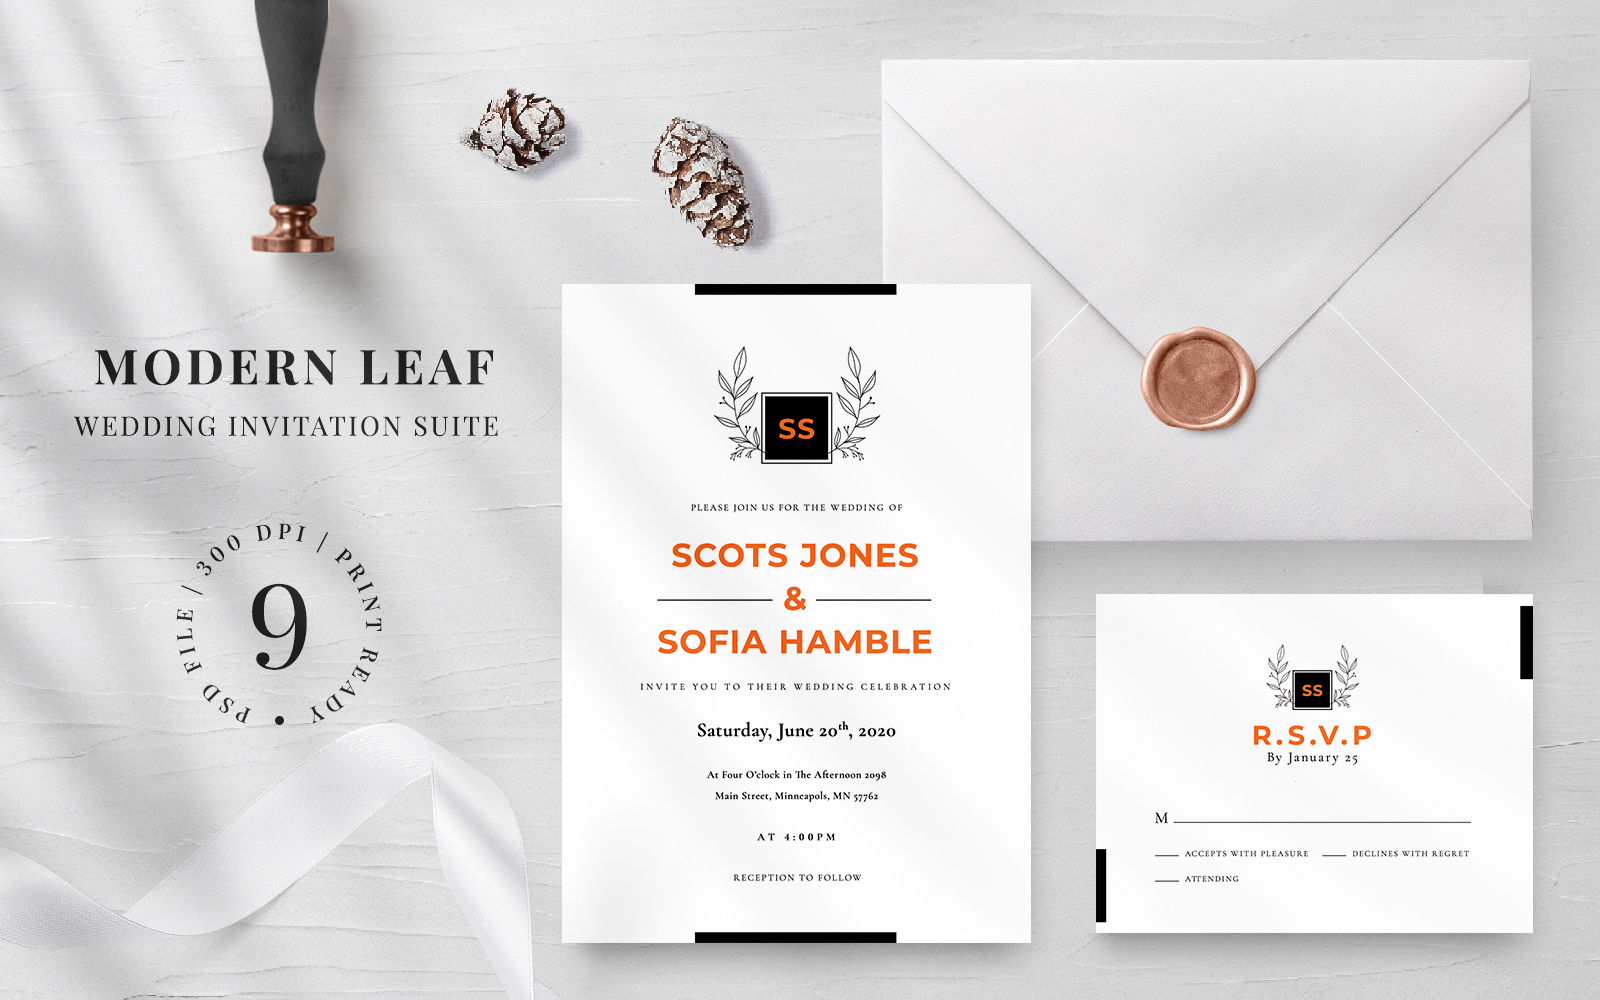 Modern Leaf Wedding Invitation Suite - Corporate Identity Template